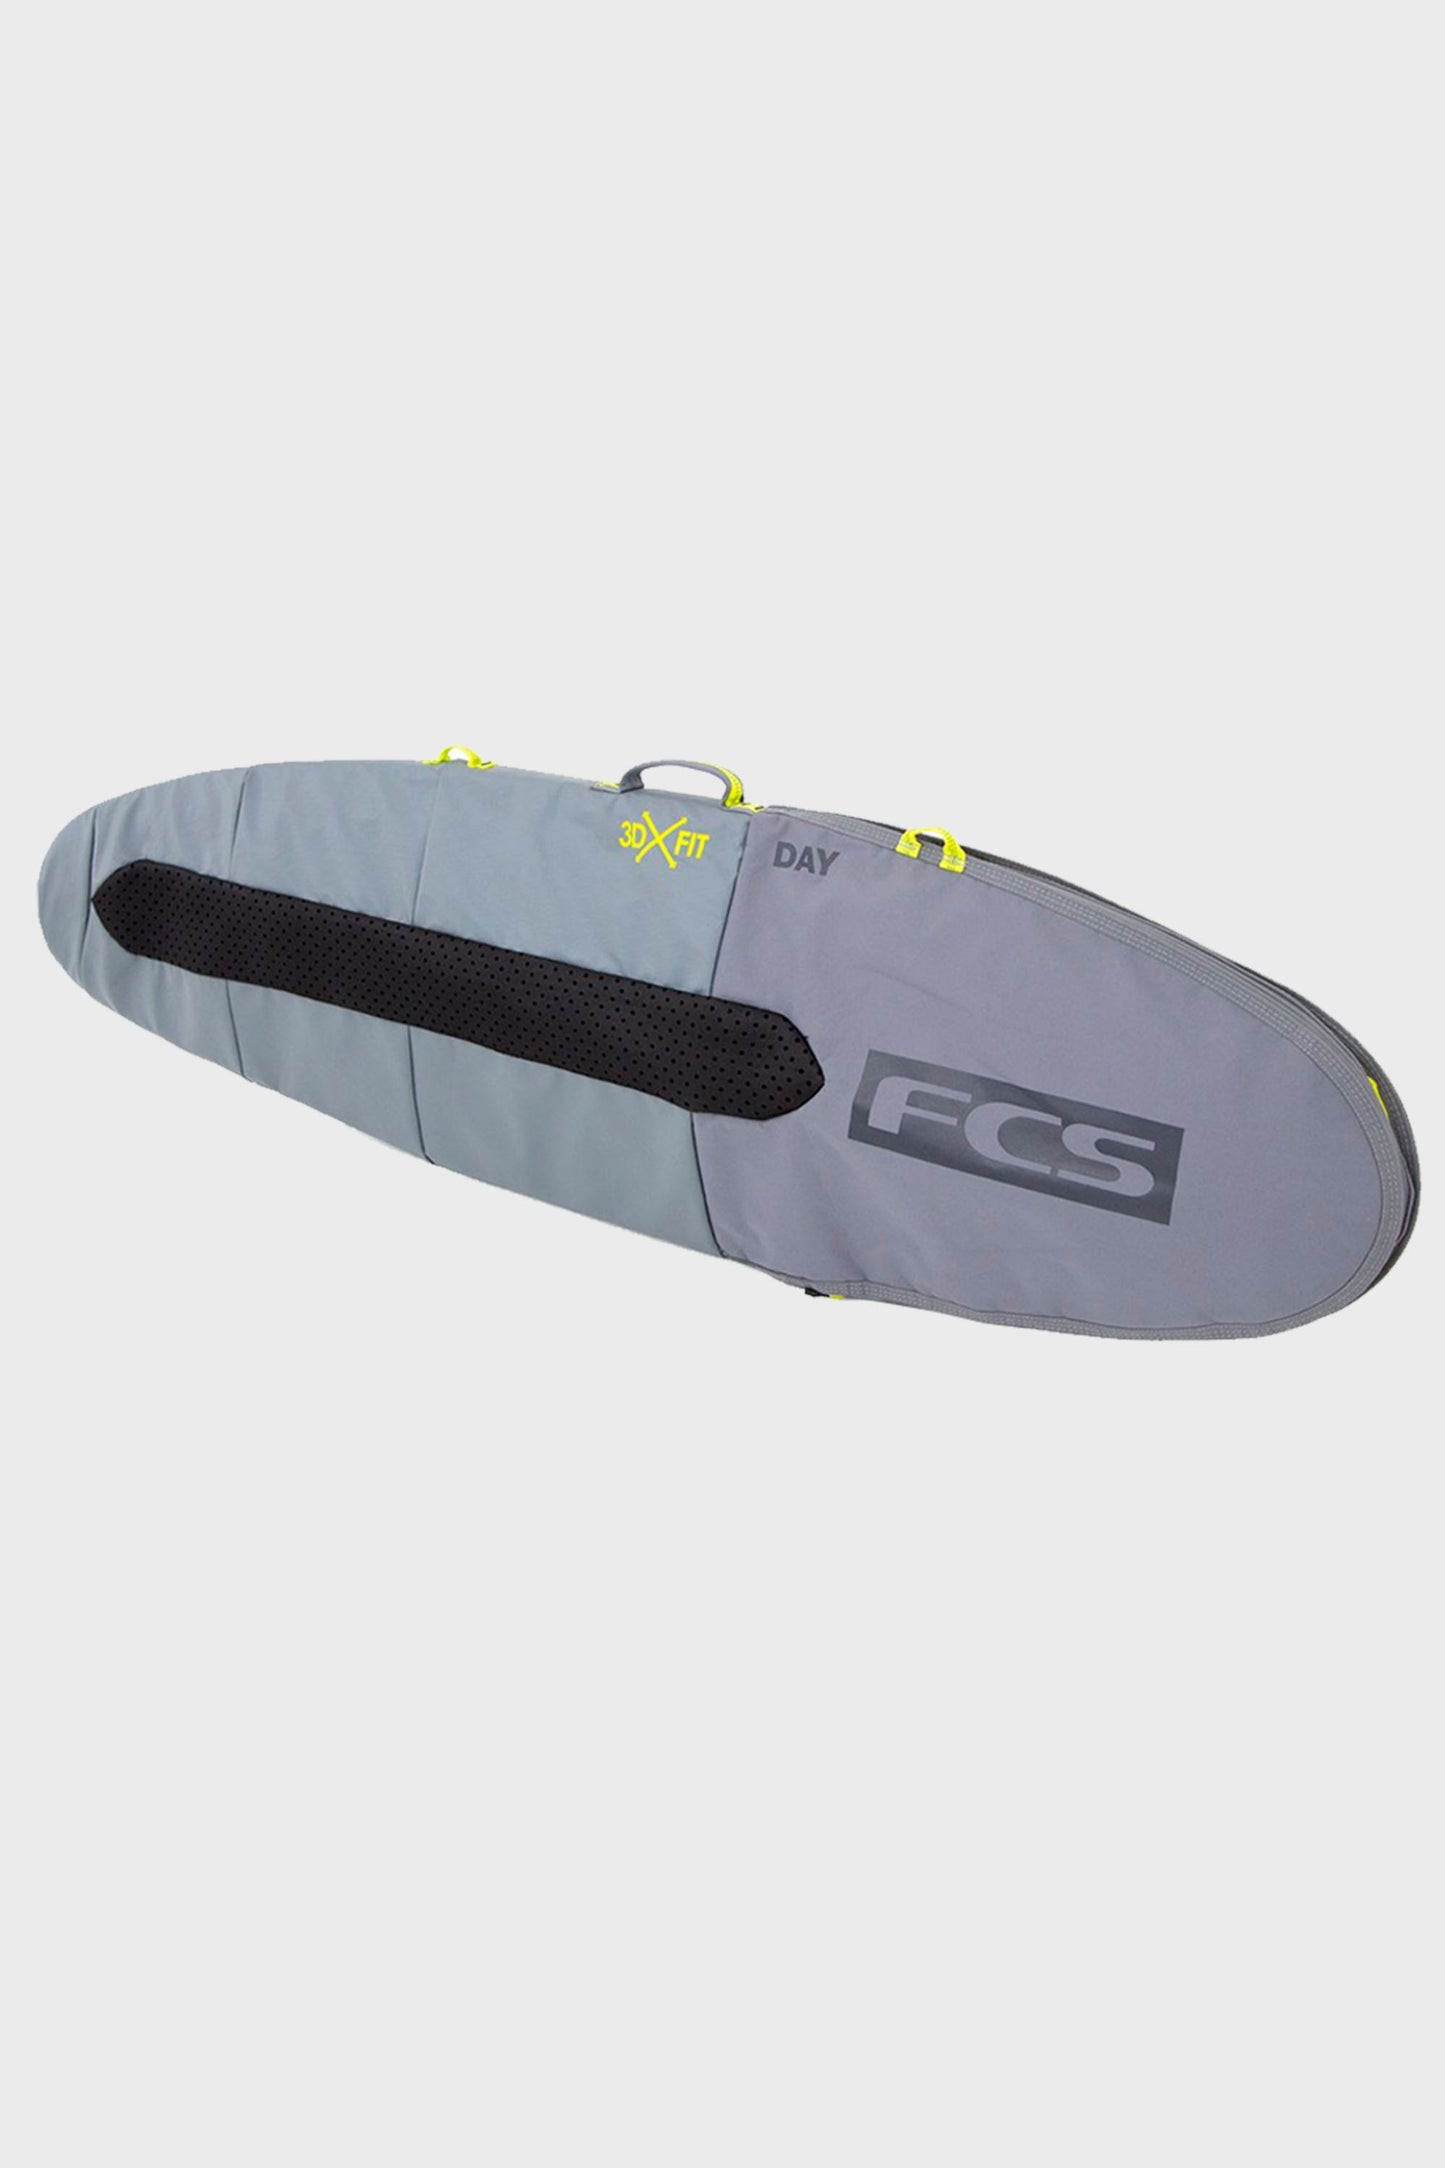 
                  
                       Pukas-Surf-Shop-FCS-Boardbags-Day-Funboard-5.9
                  
                